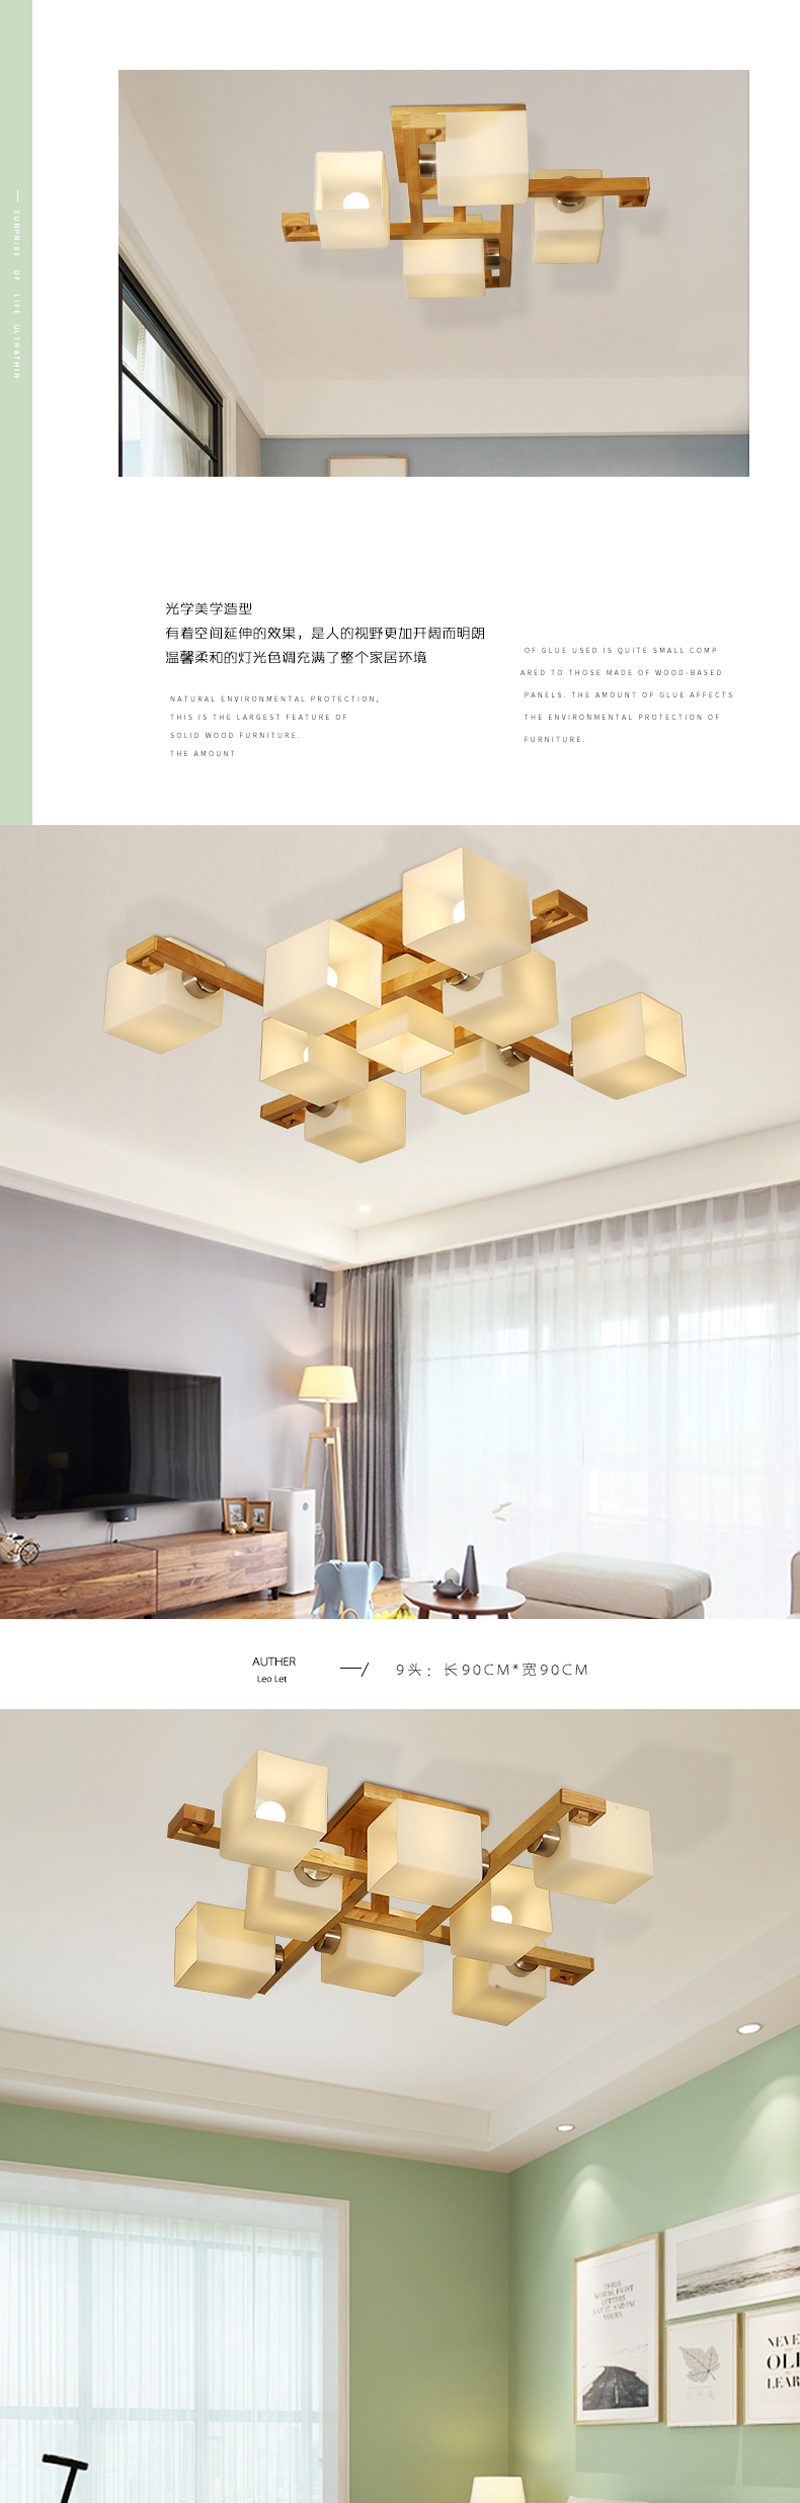 LED Lighting Home Decorative LED Celling Lamp Wooden LED Light